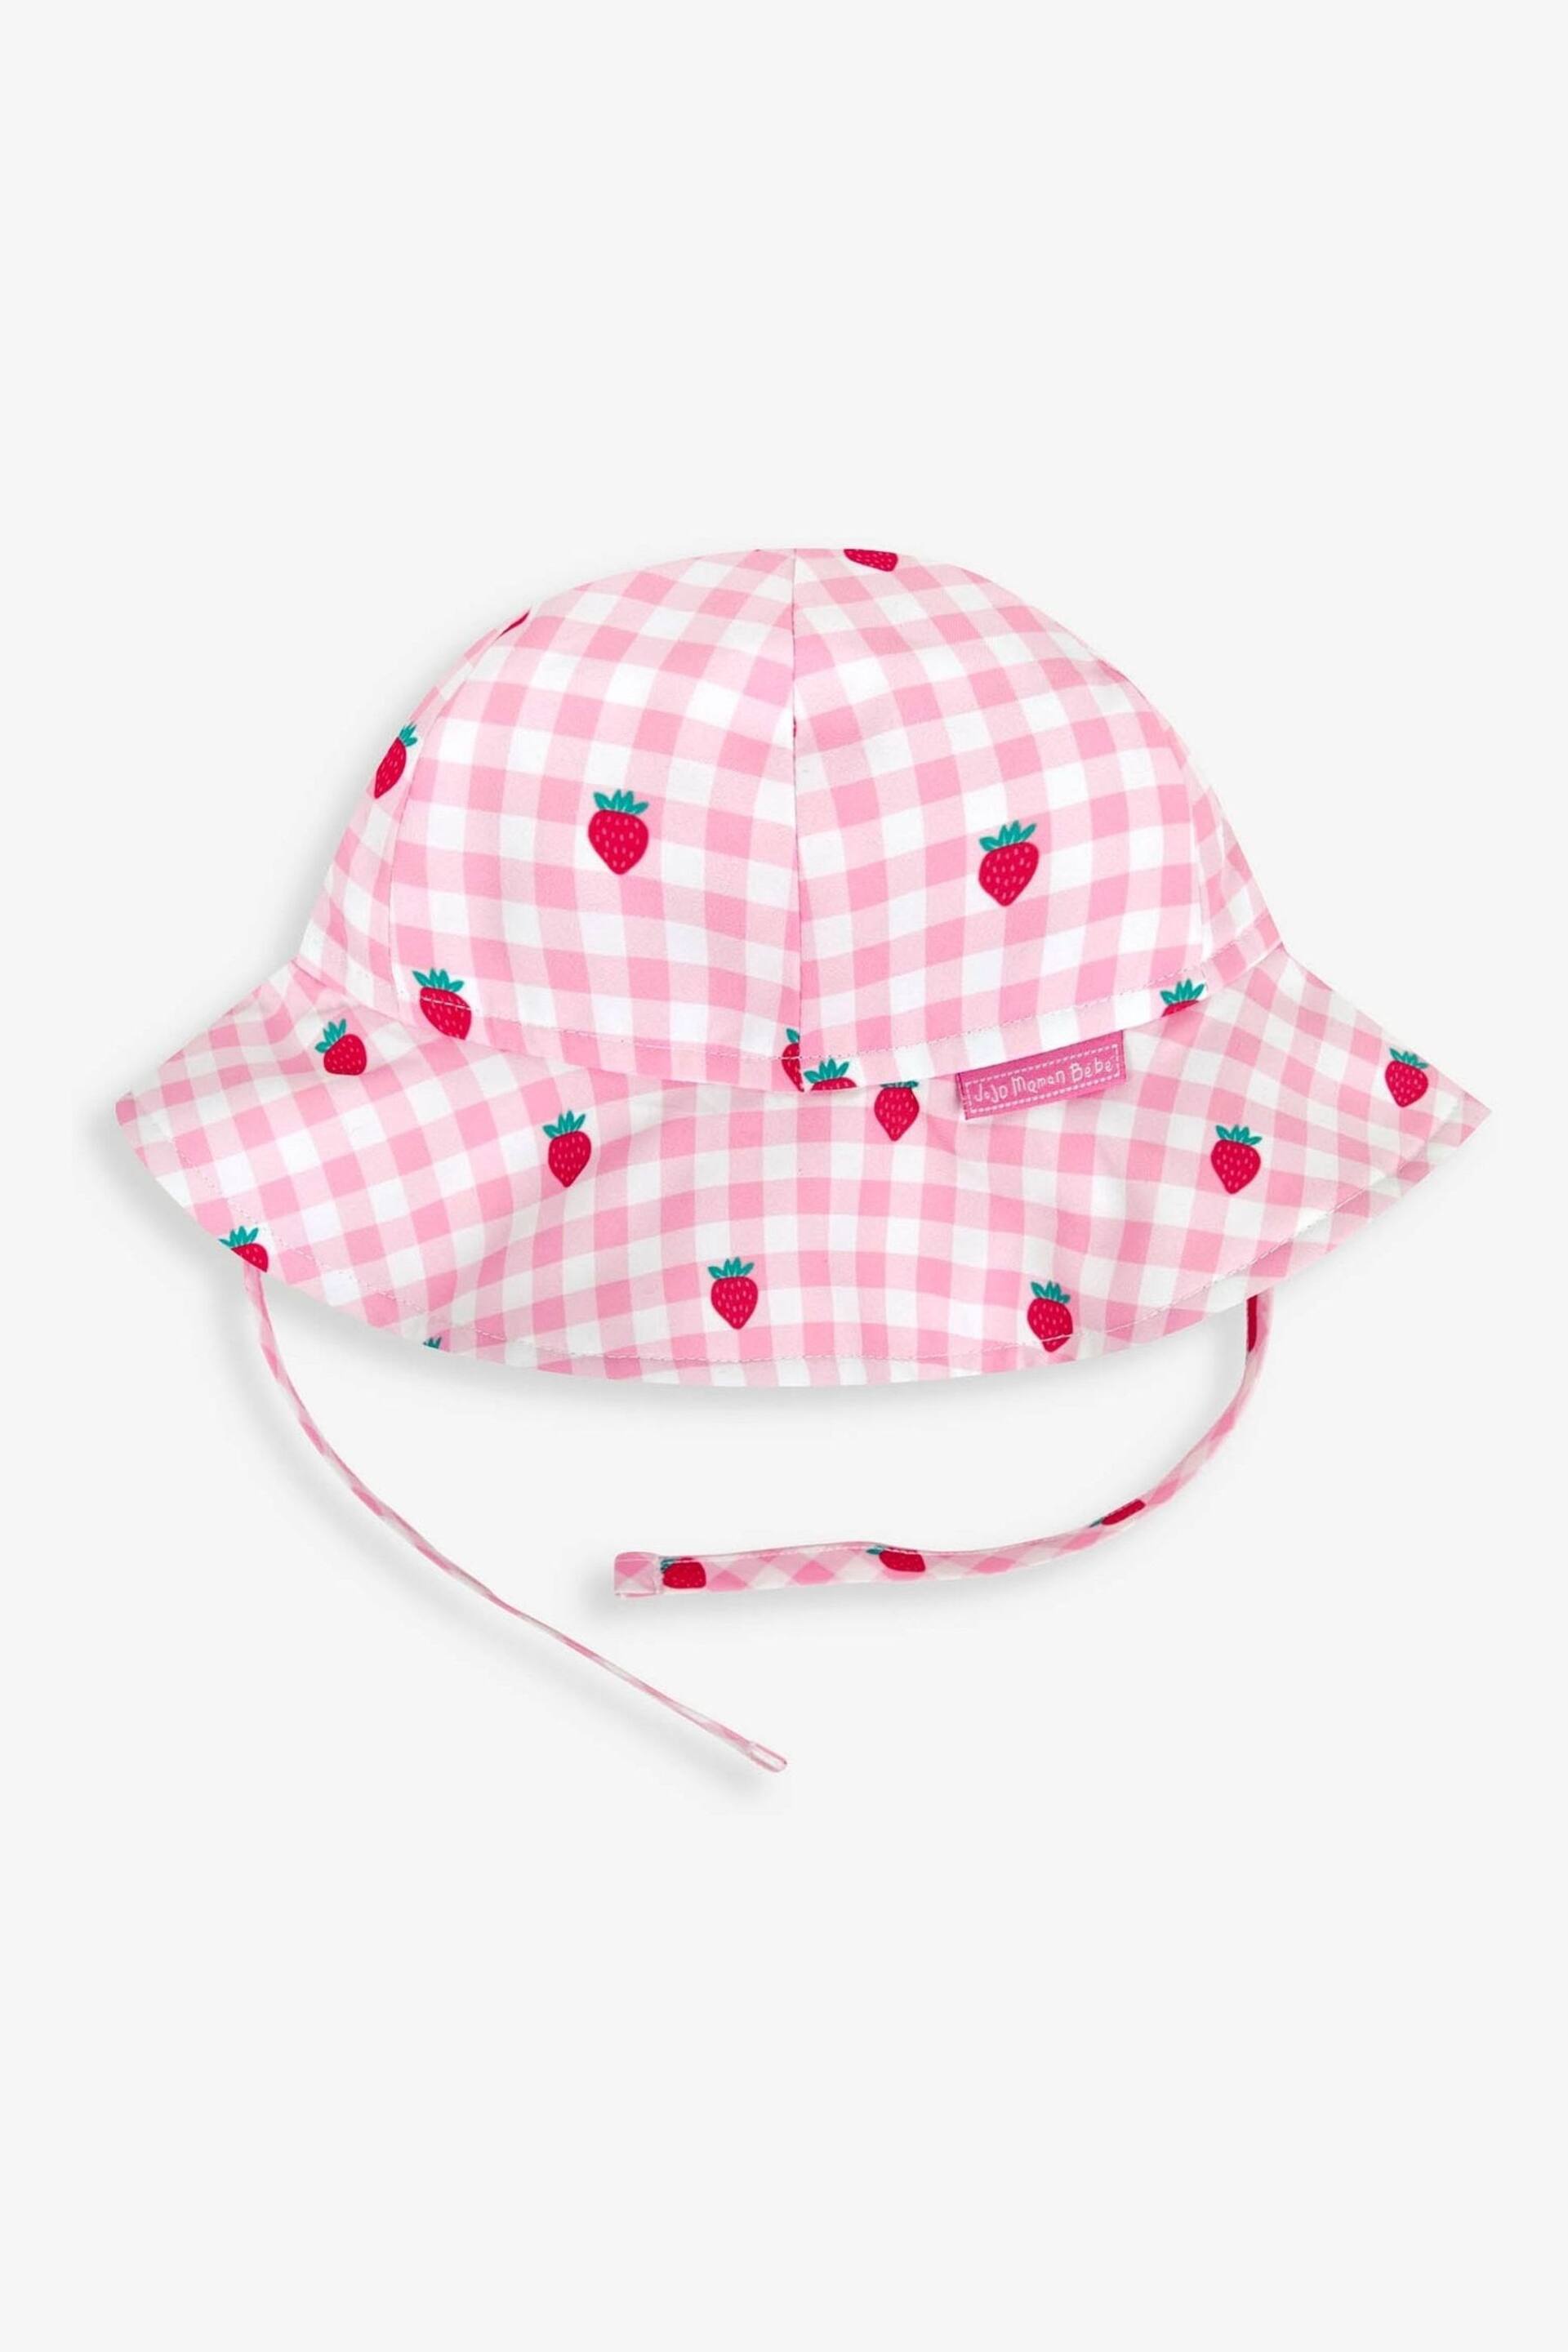 JoJo Maman Bébé Pink Strawberry UPF 50 Floppy Sun Hat - Image 1 of 3